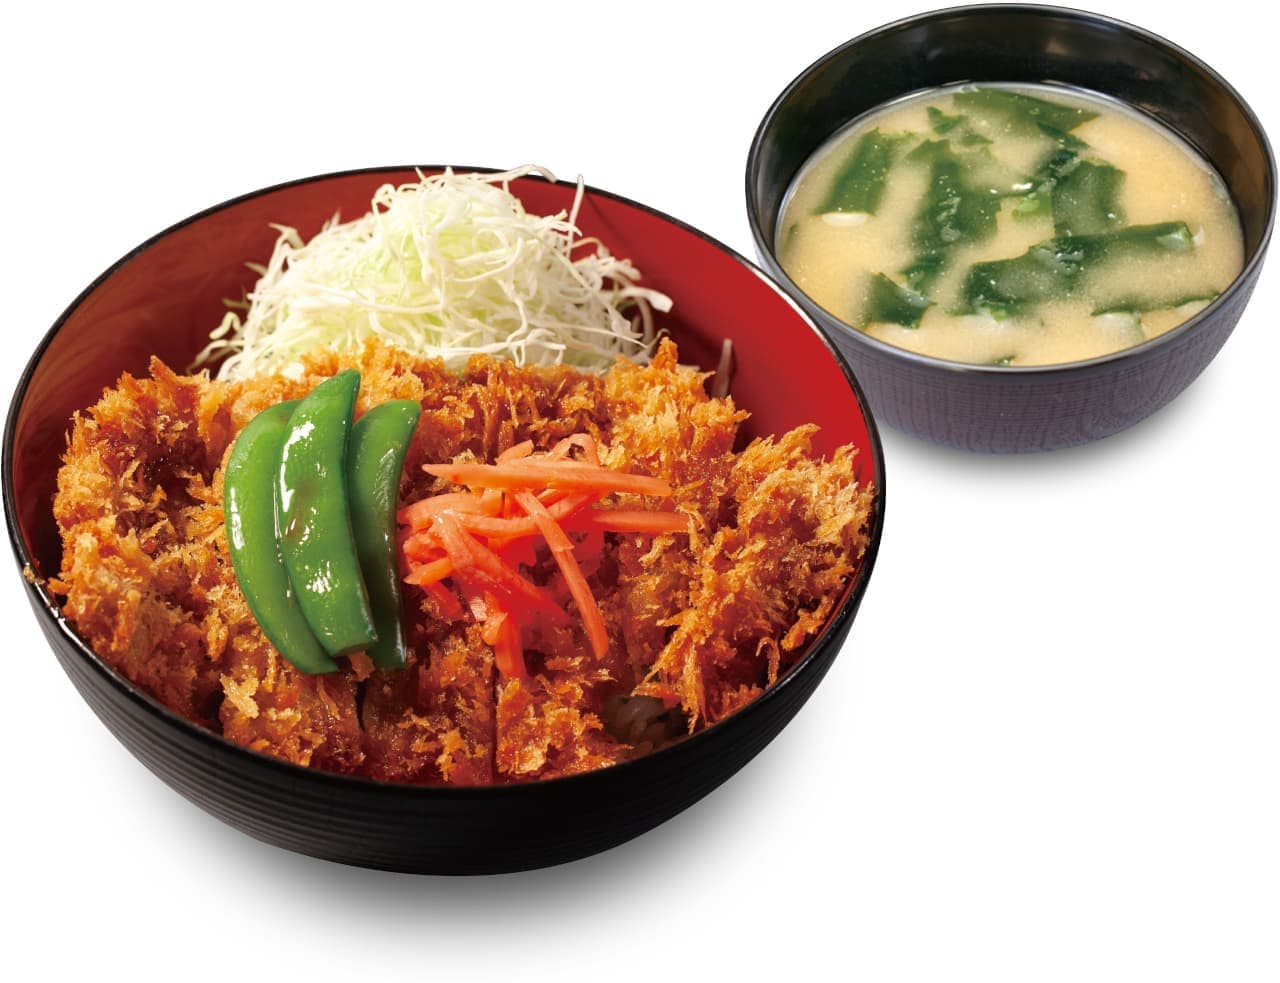 Matsunoya "Sauce Tare Katsudon" (Bowl of rice topped with pork cutlet and sauce)